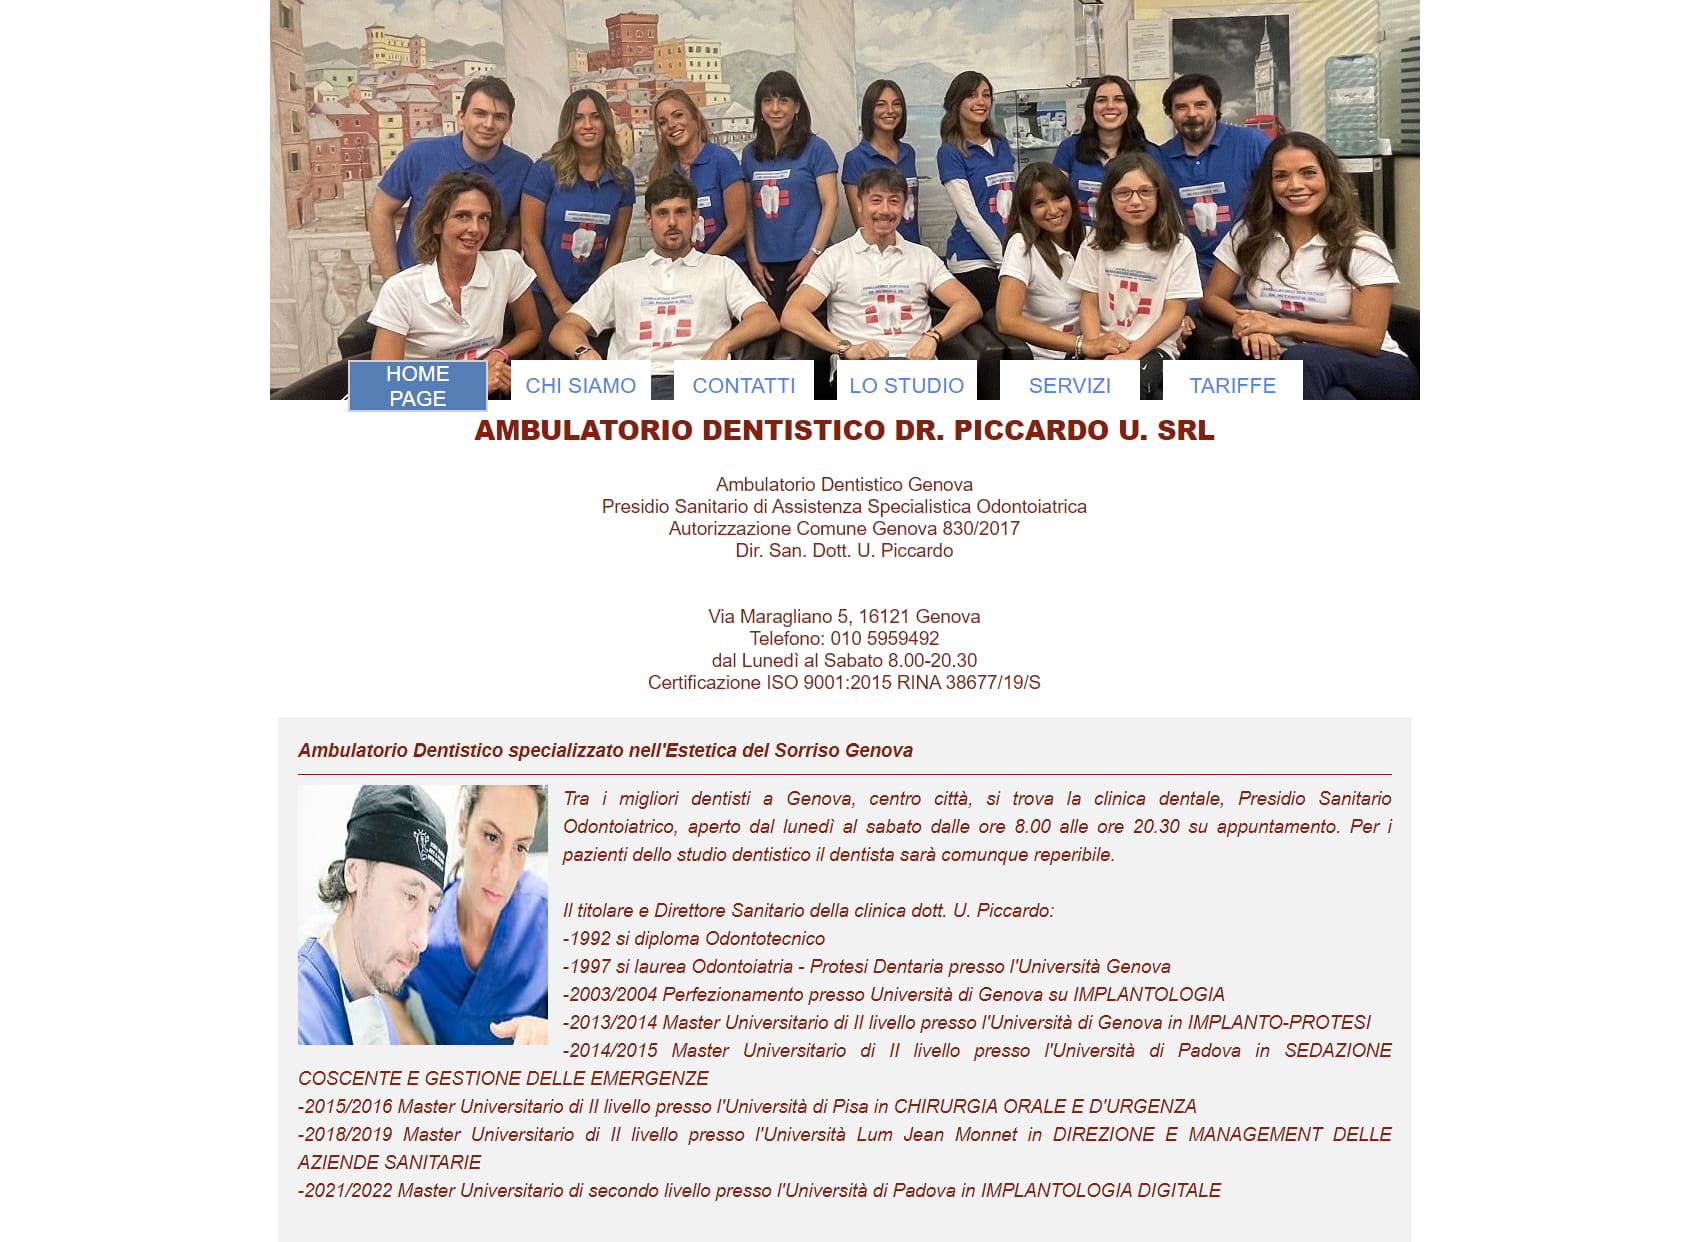 Dott. U. Piccardo, Genoa Dental Implantology